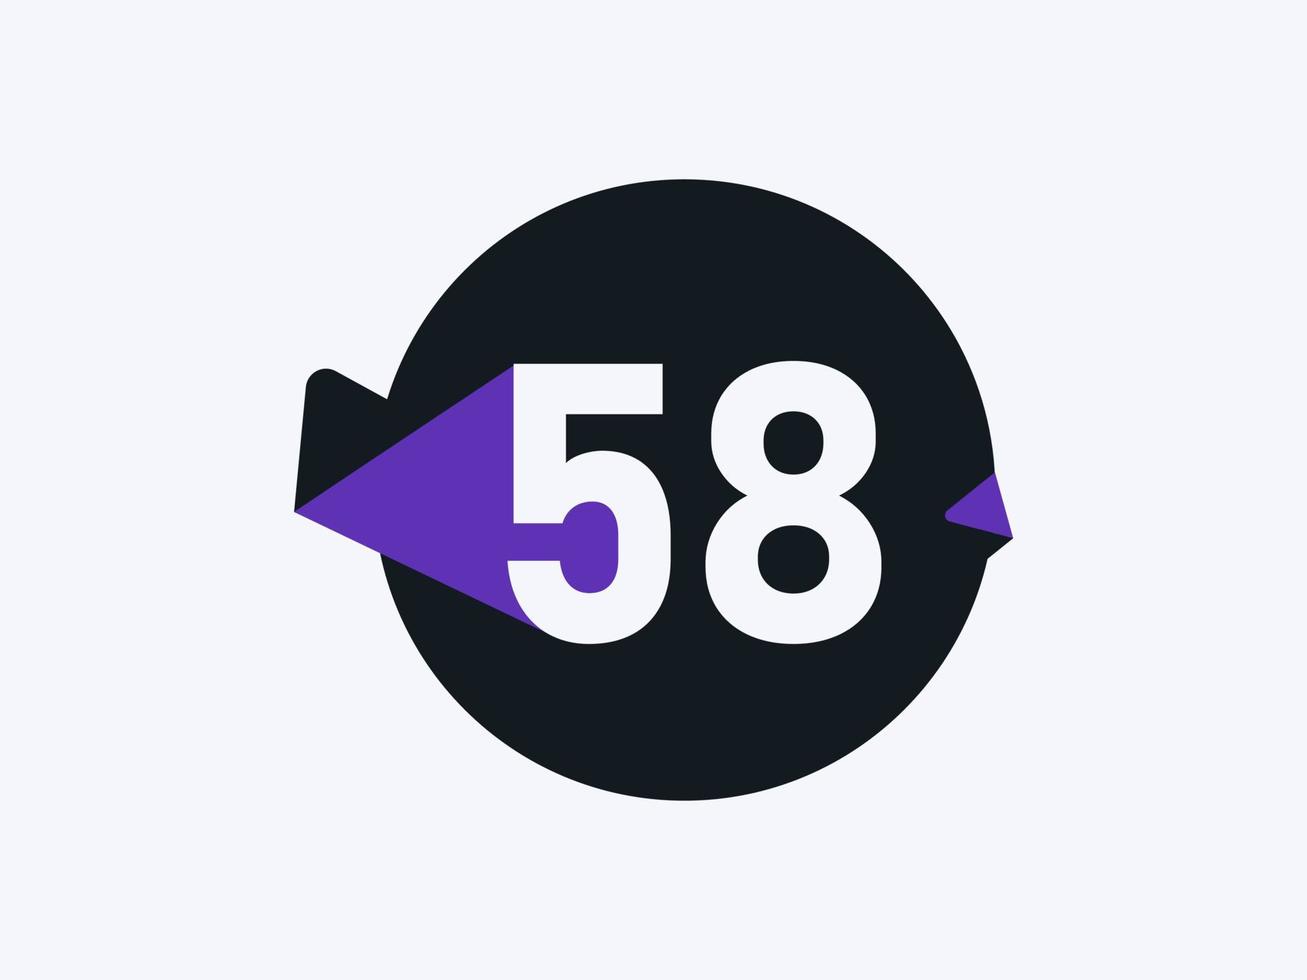 58 Number logo icon design vector image. Number logo icon design vector image